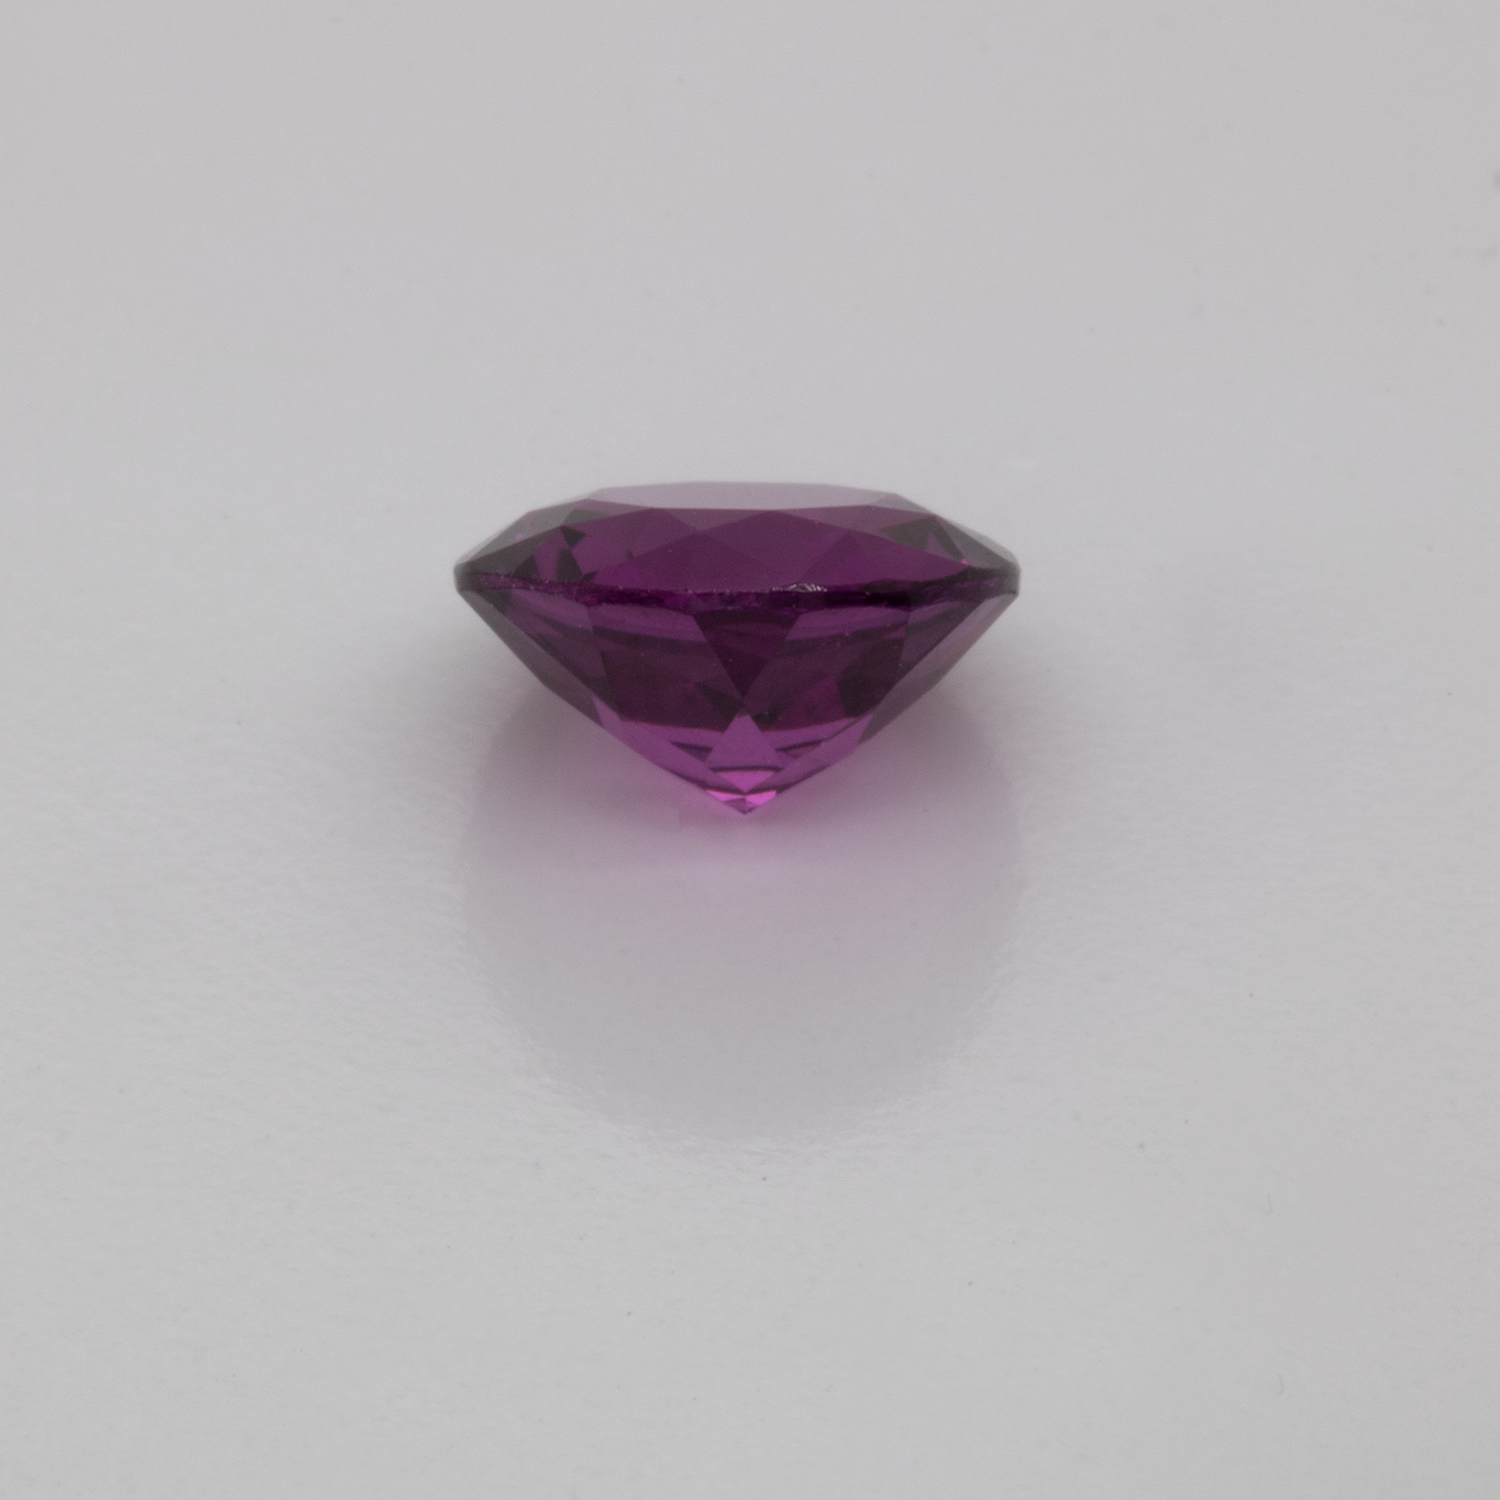 Royal Purple Garnet - purple, round, 7x7 mm, 1.42-1.66 cts, No. RP92002